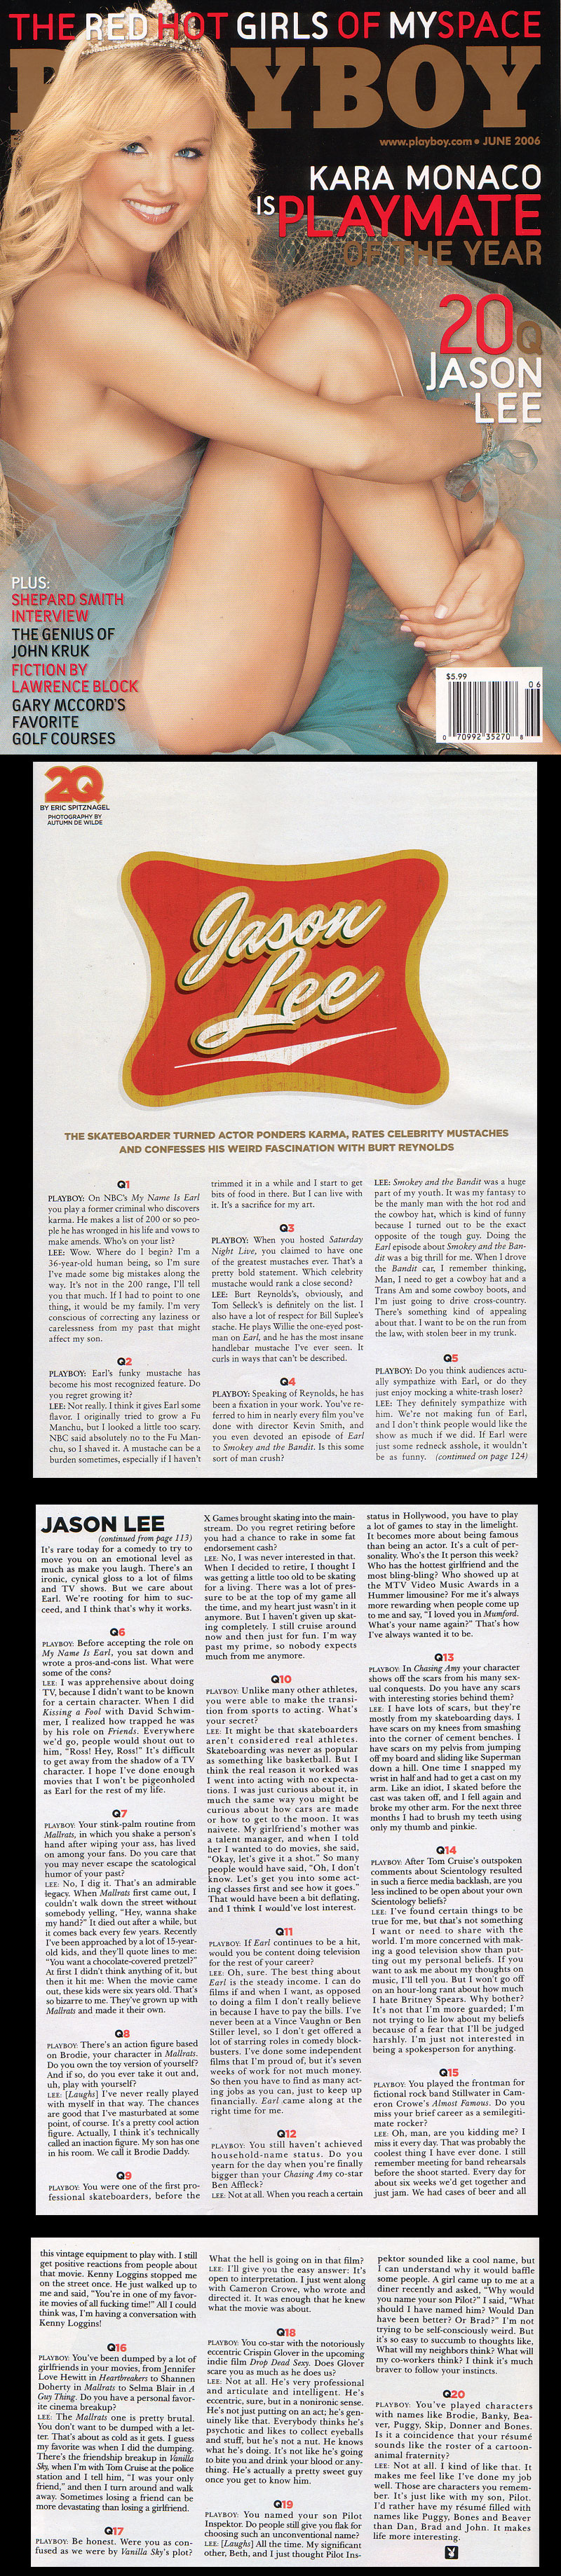 Jason Lee's interview in Playboy